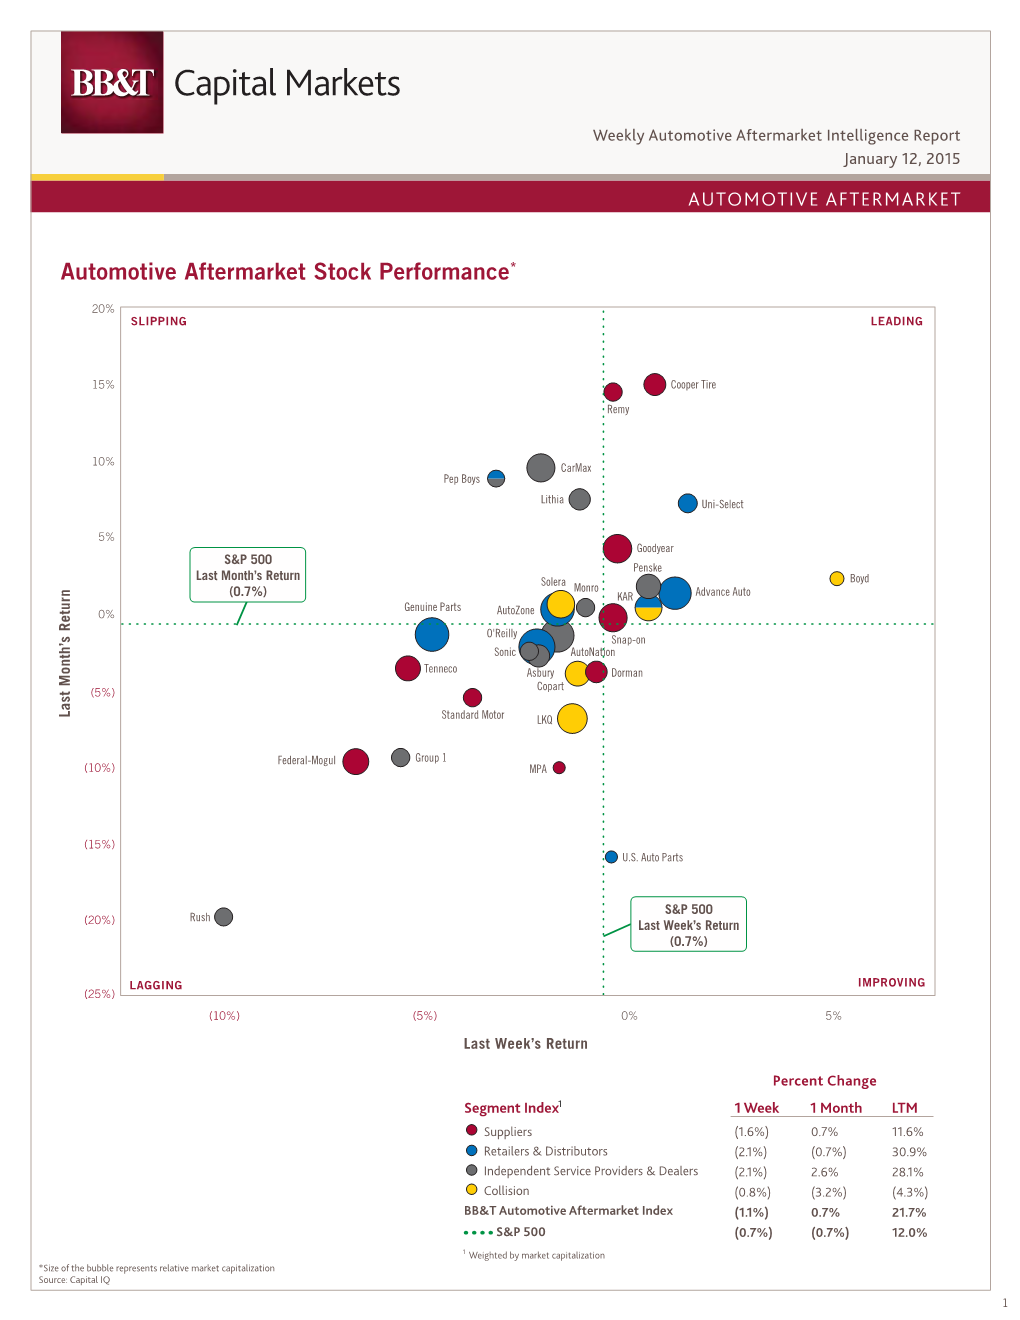 Automotive Aftermarket Stock Performance*